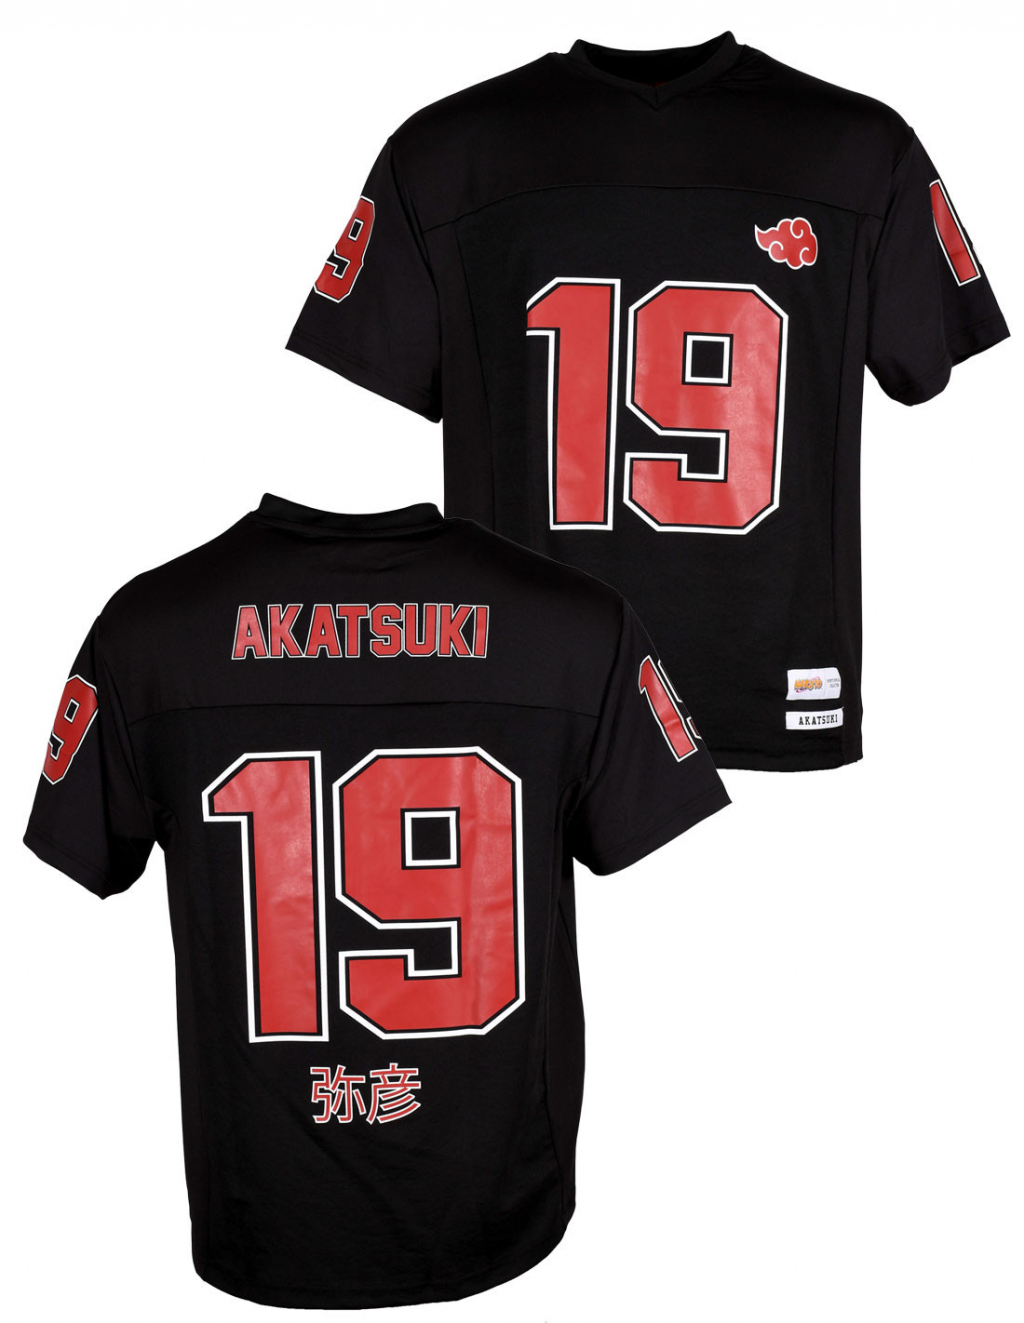 NARUTO - Akatsuki - T-Shirt Sports US Replica unisex (S)